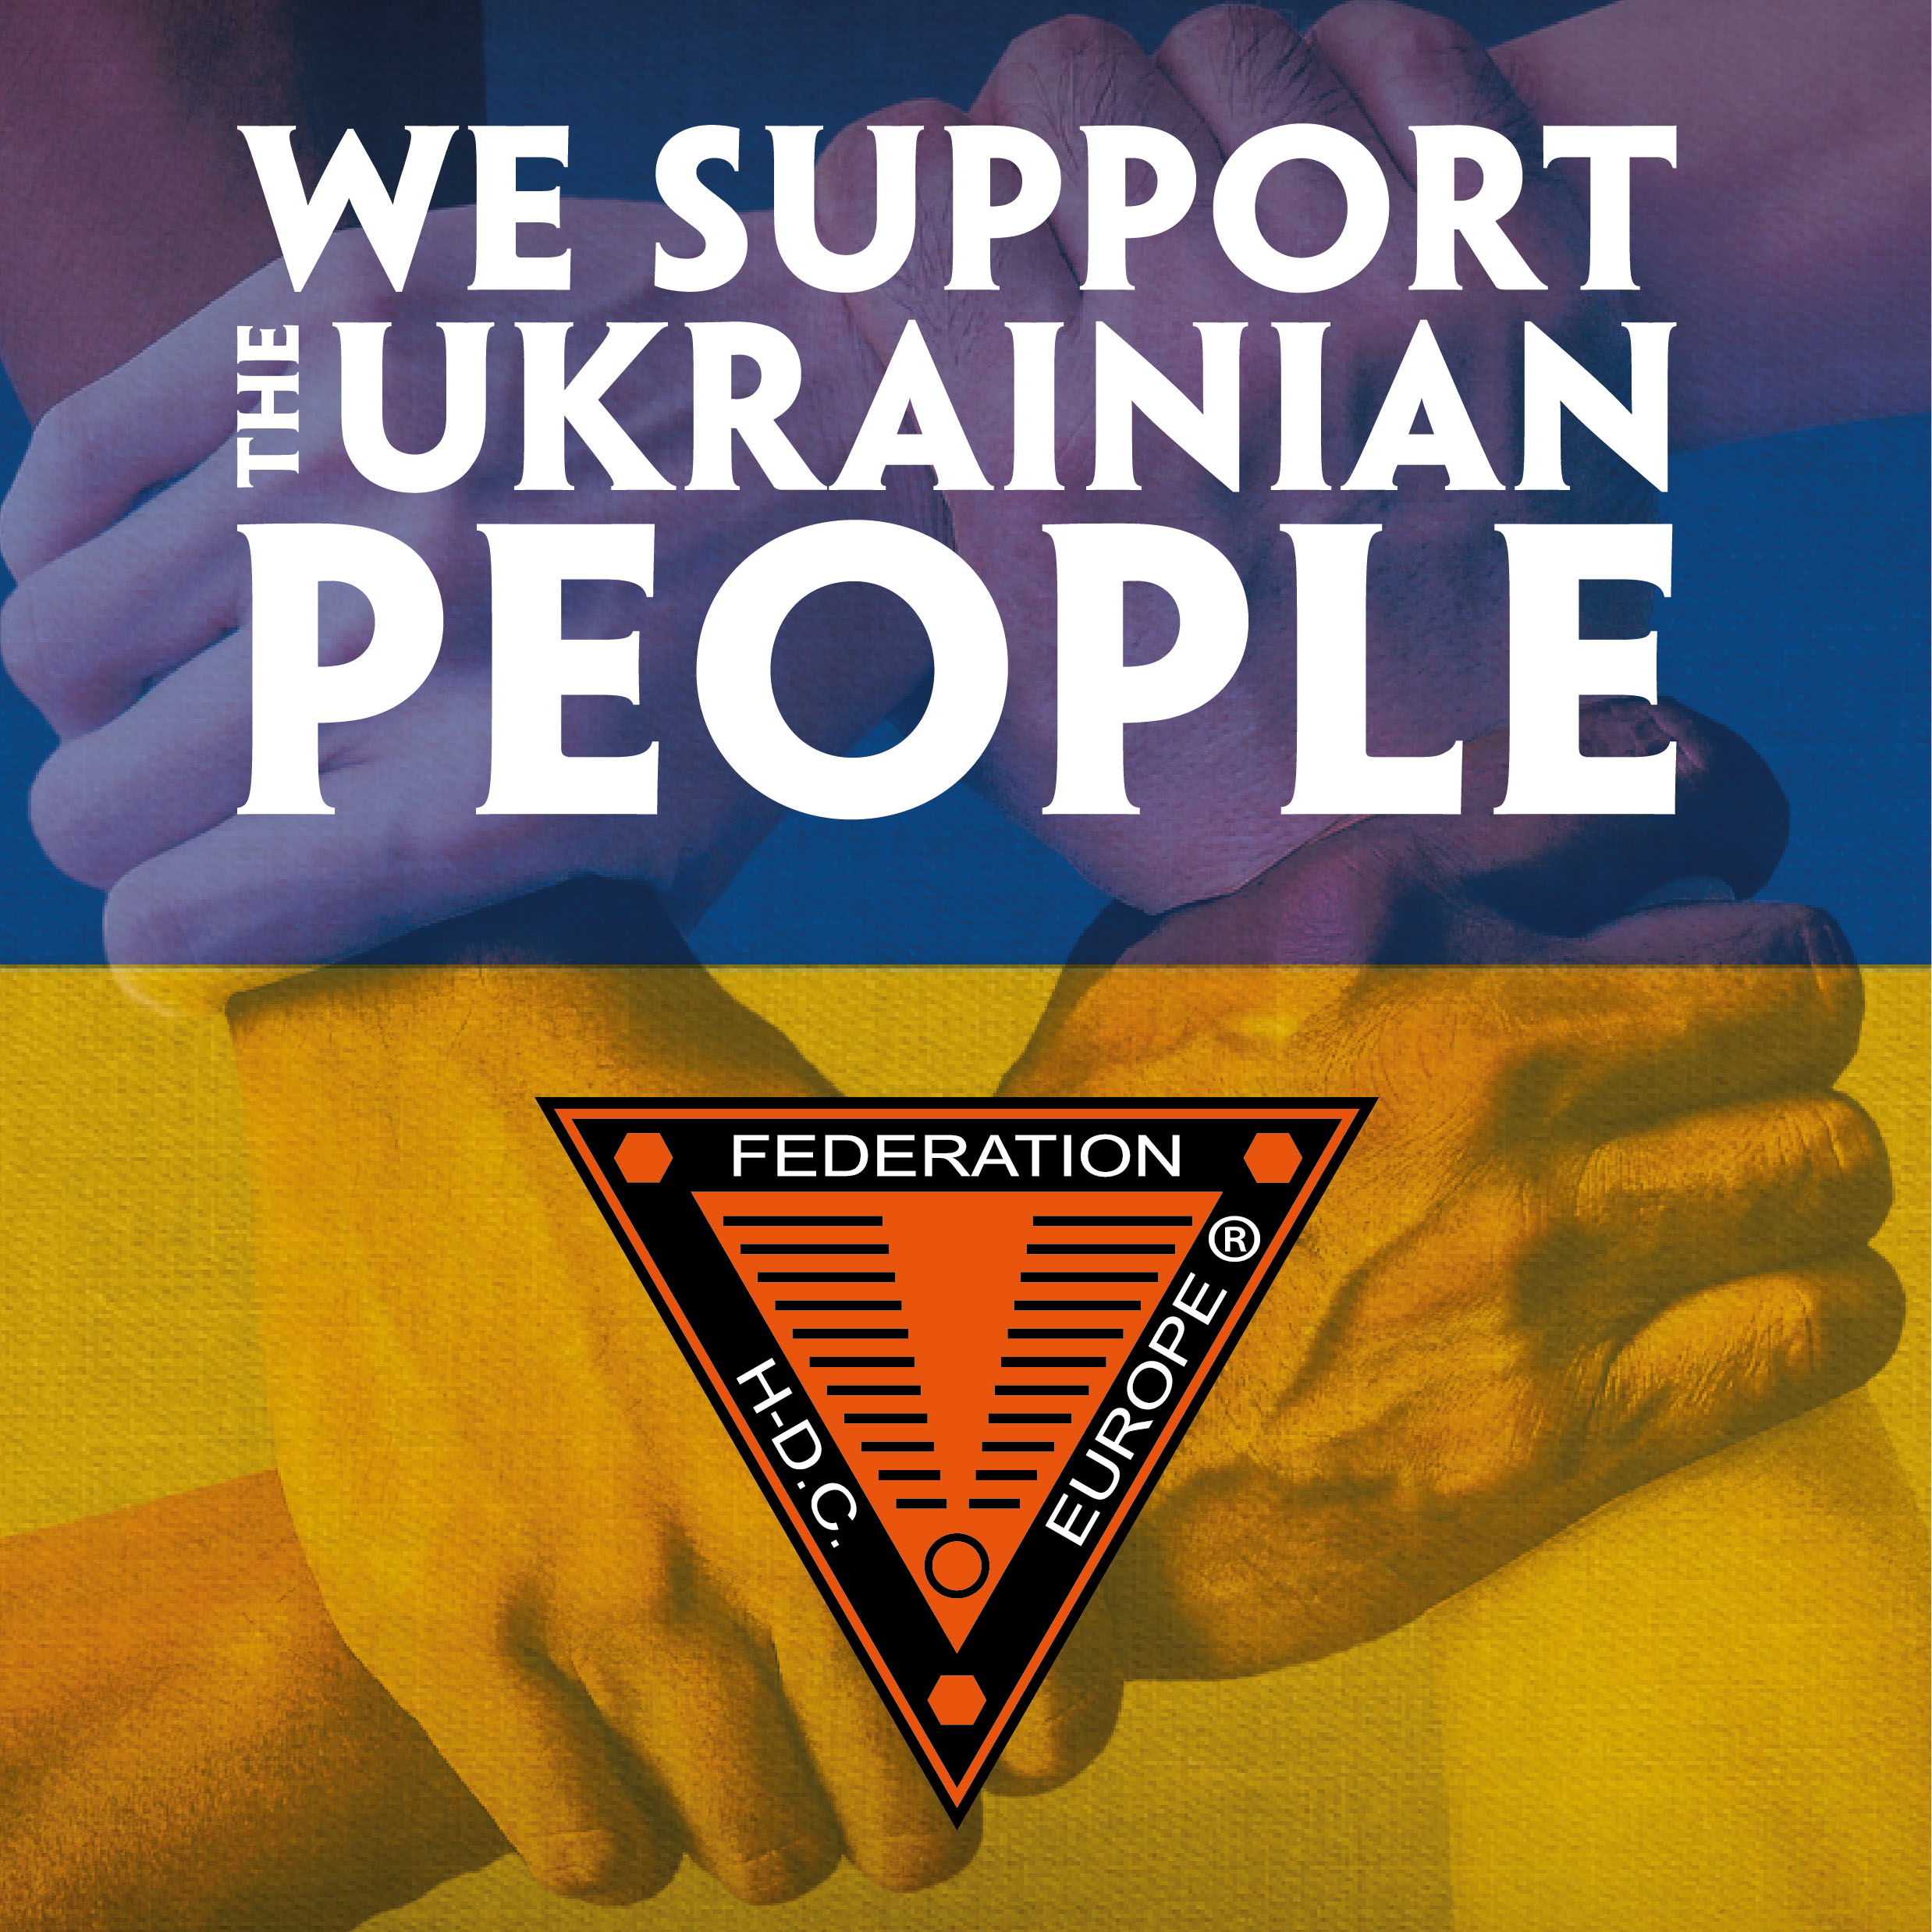 Support%20Ukraine%20fed